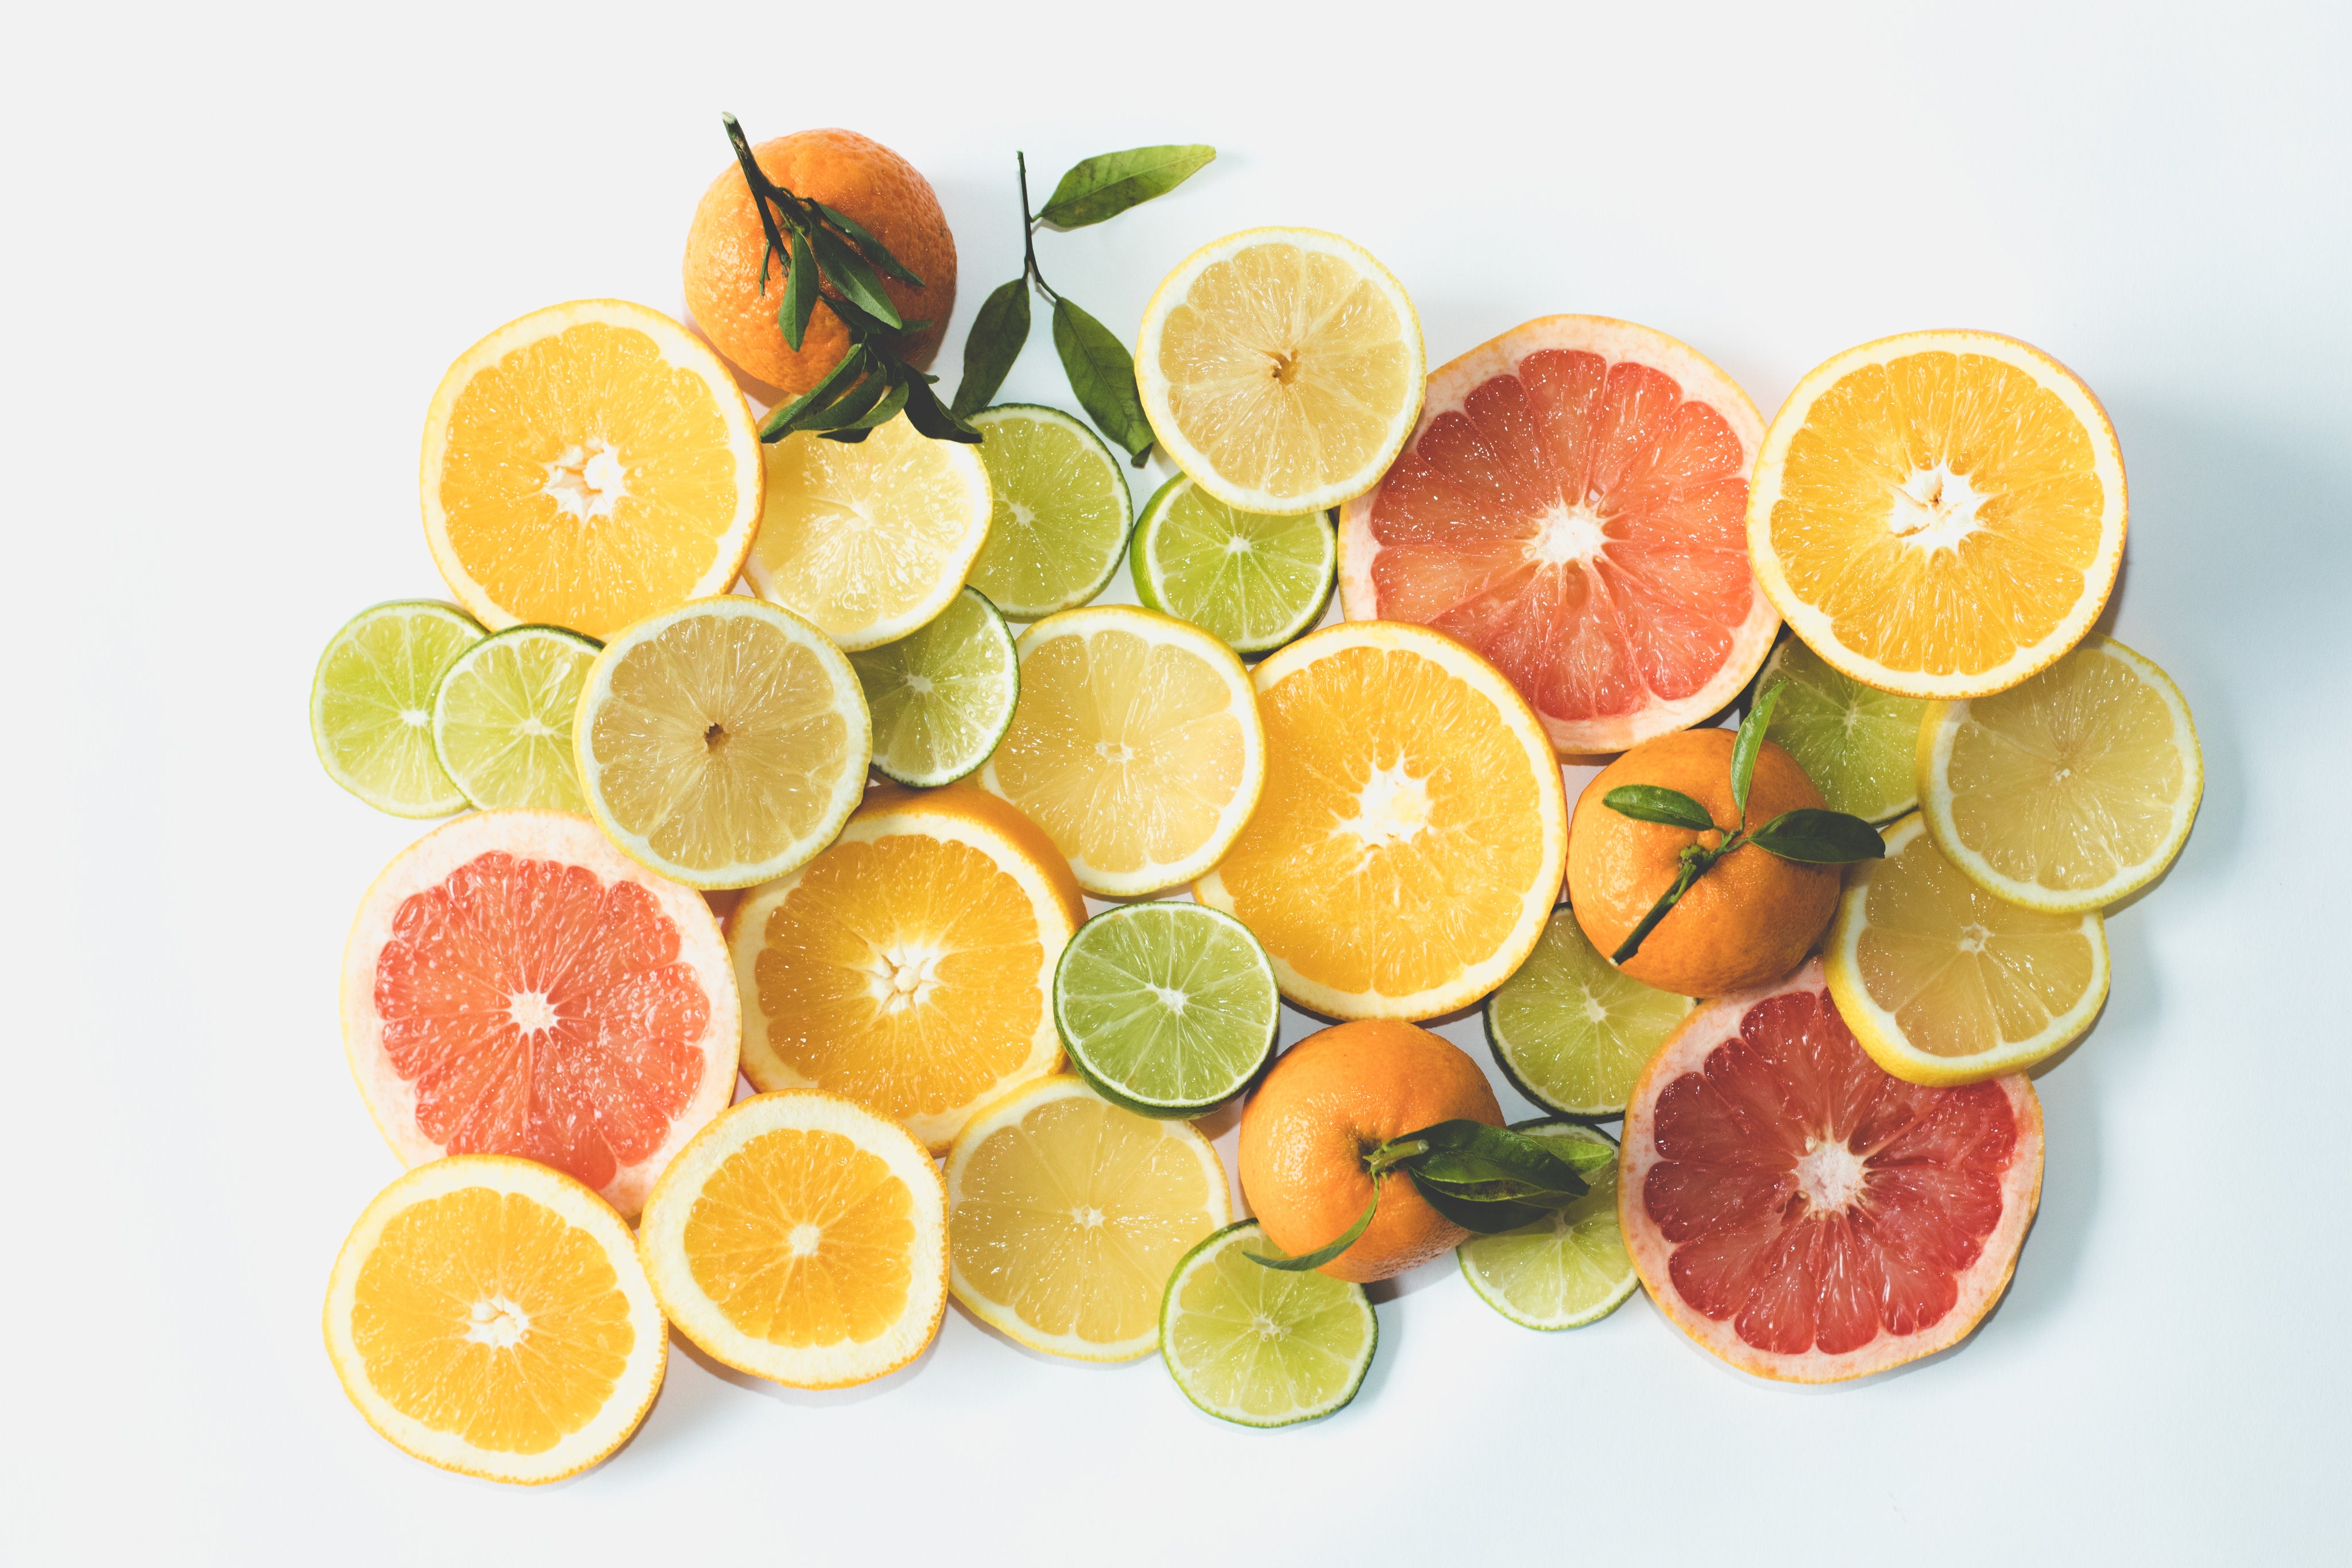 Citrus fruits with vitamin C for skin brightening